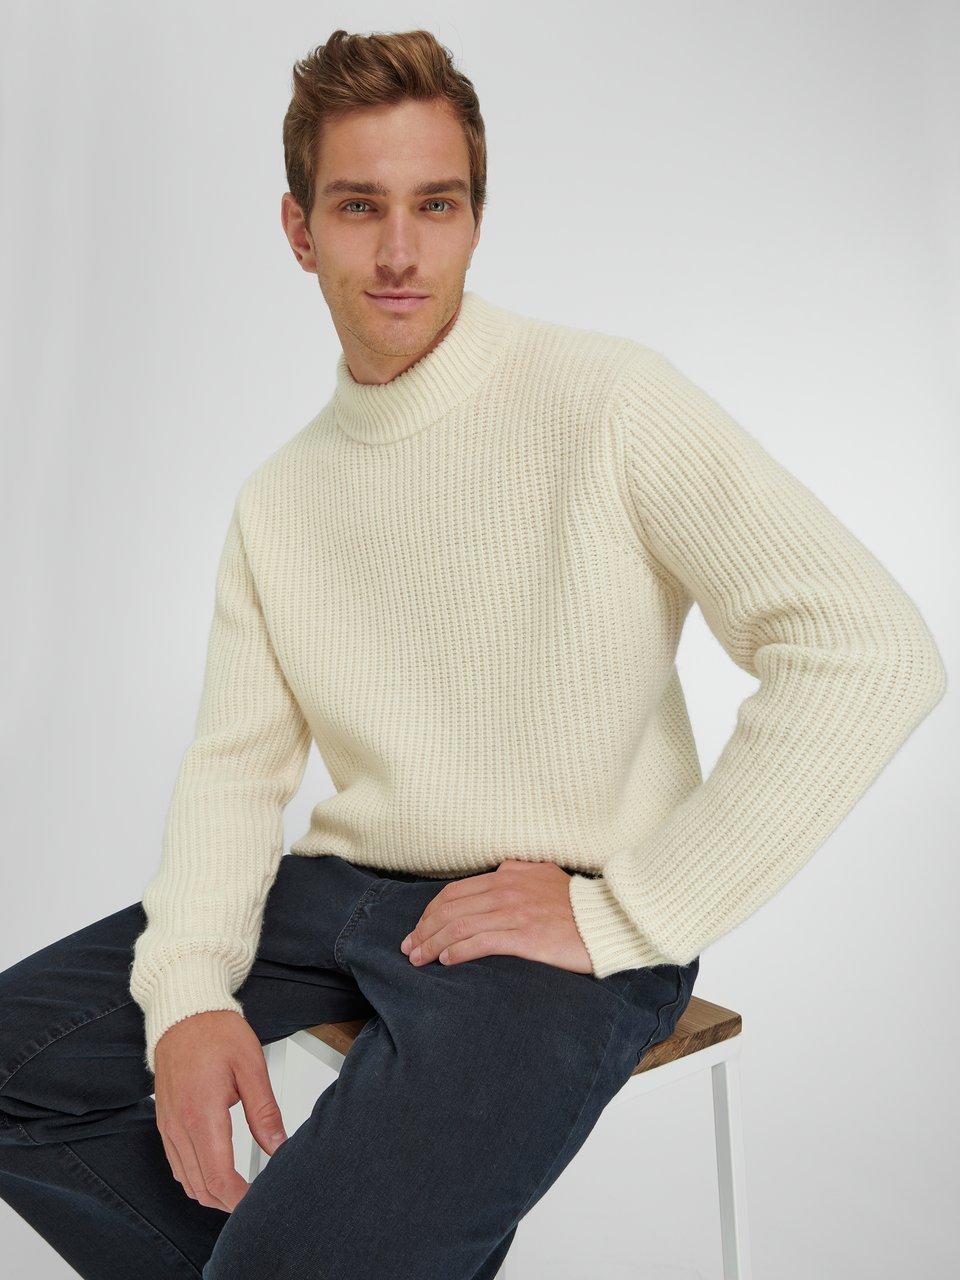 Louis Sayn - Grofgebreide trui van 100% scheerwol